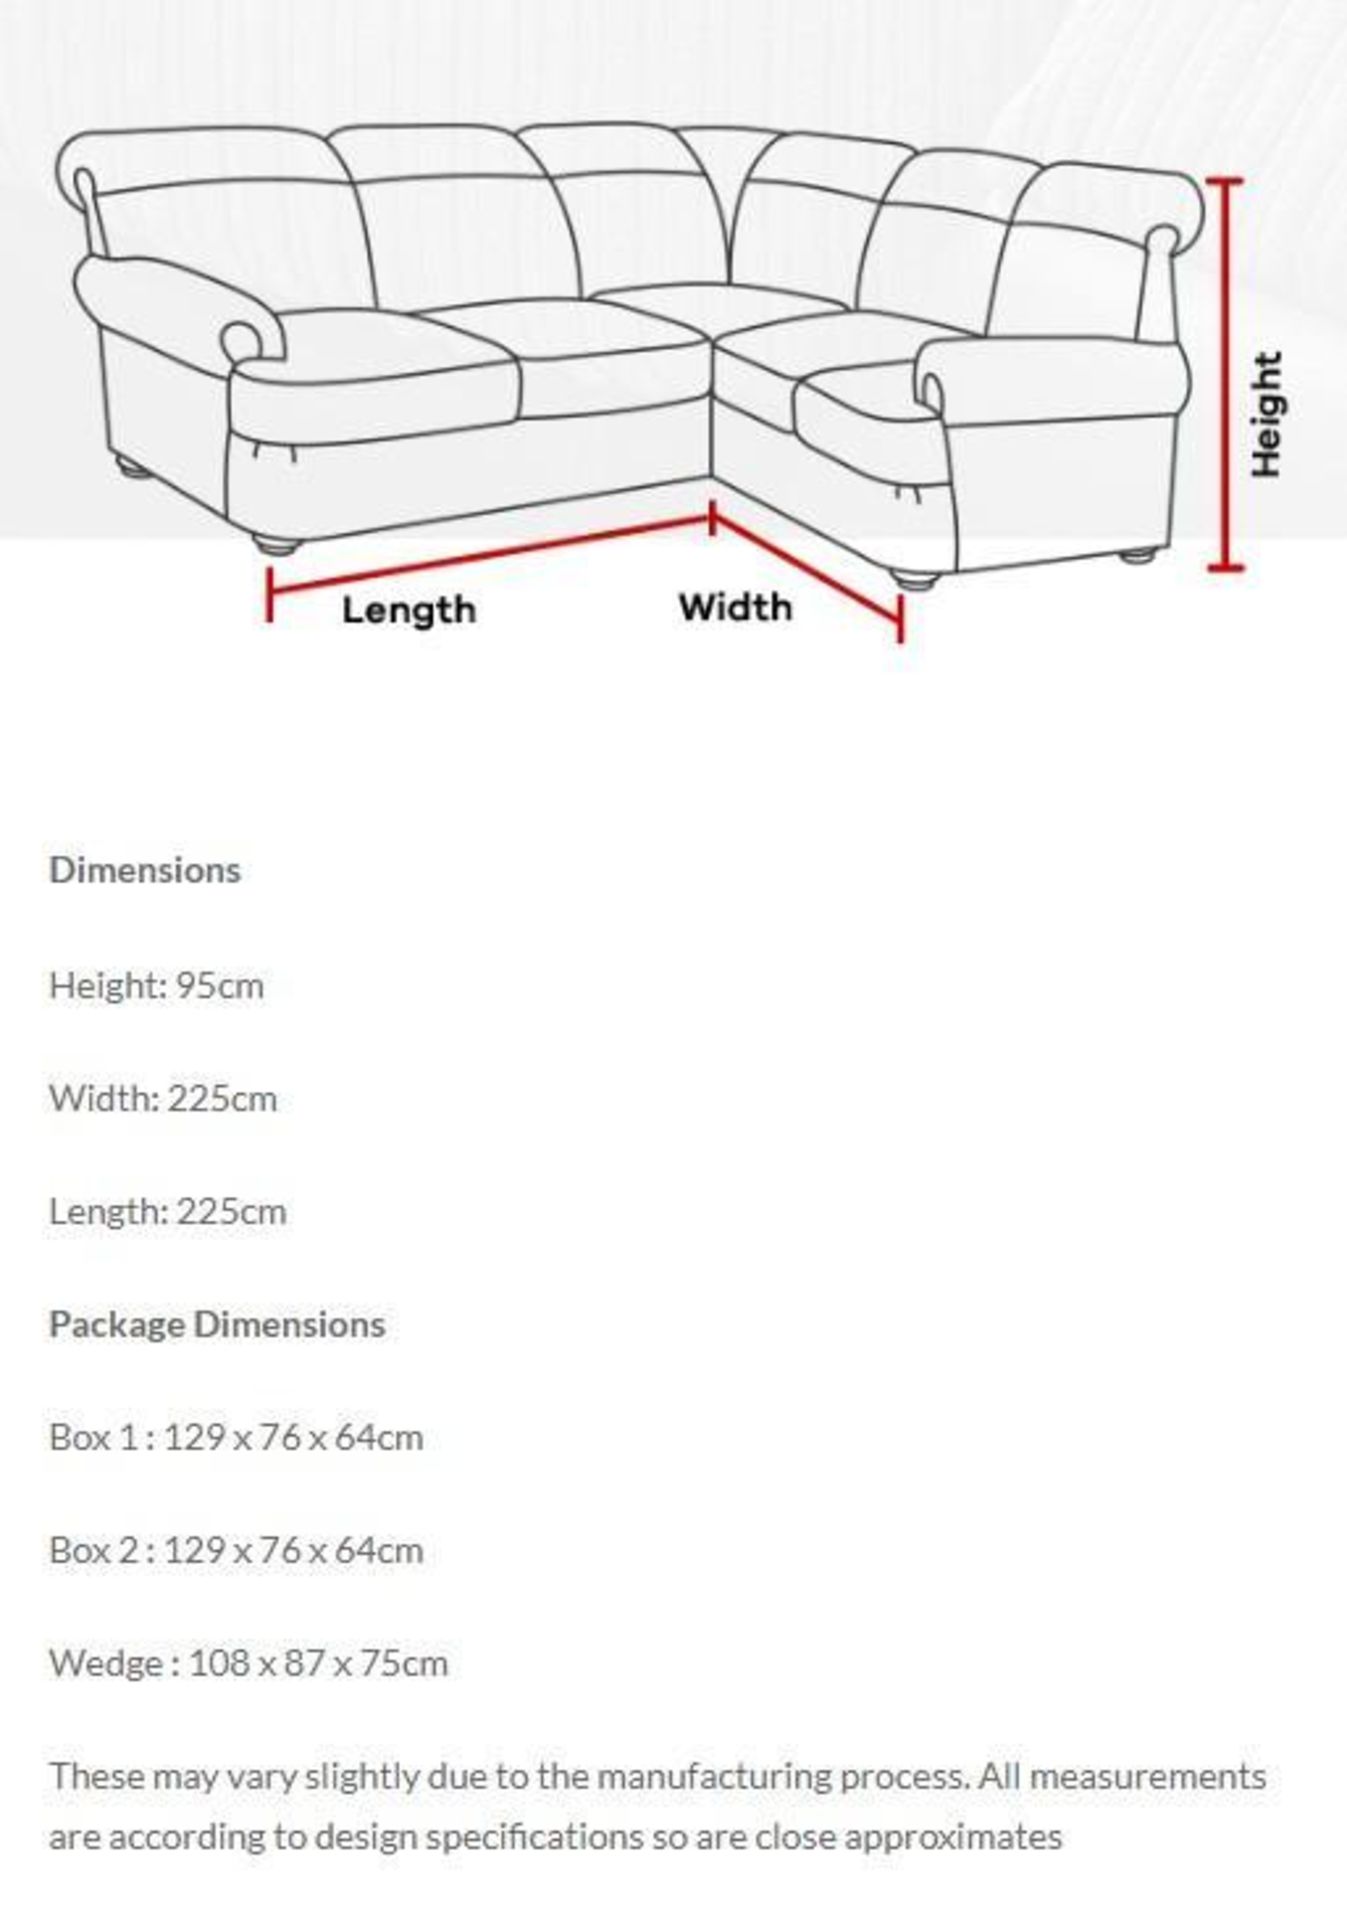 BRAND NEW & BOXED California corner sofa in grey with black leather trim RRP: £1,399.00 - Bild 2 aus 2